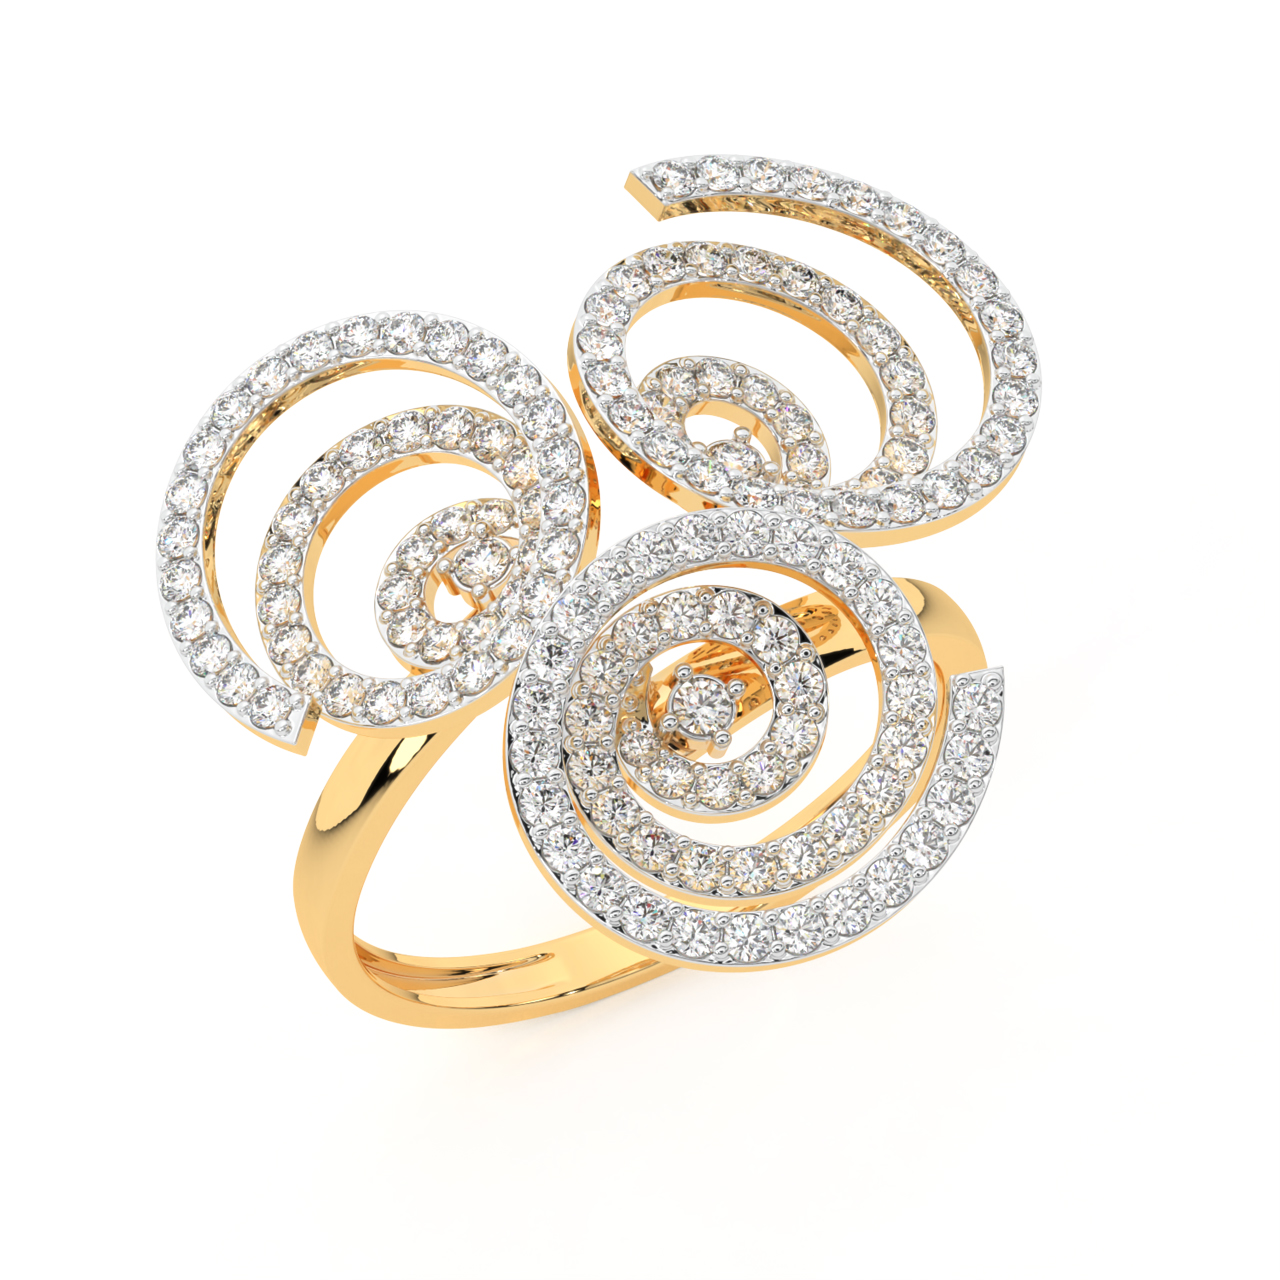 Buy Leafy Crown Diamond Ring Online - Shop Lab Grown Diamonds at Emori